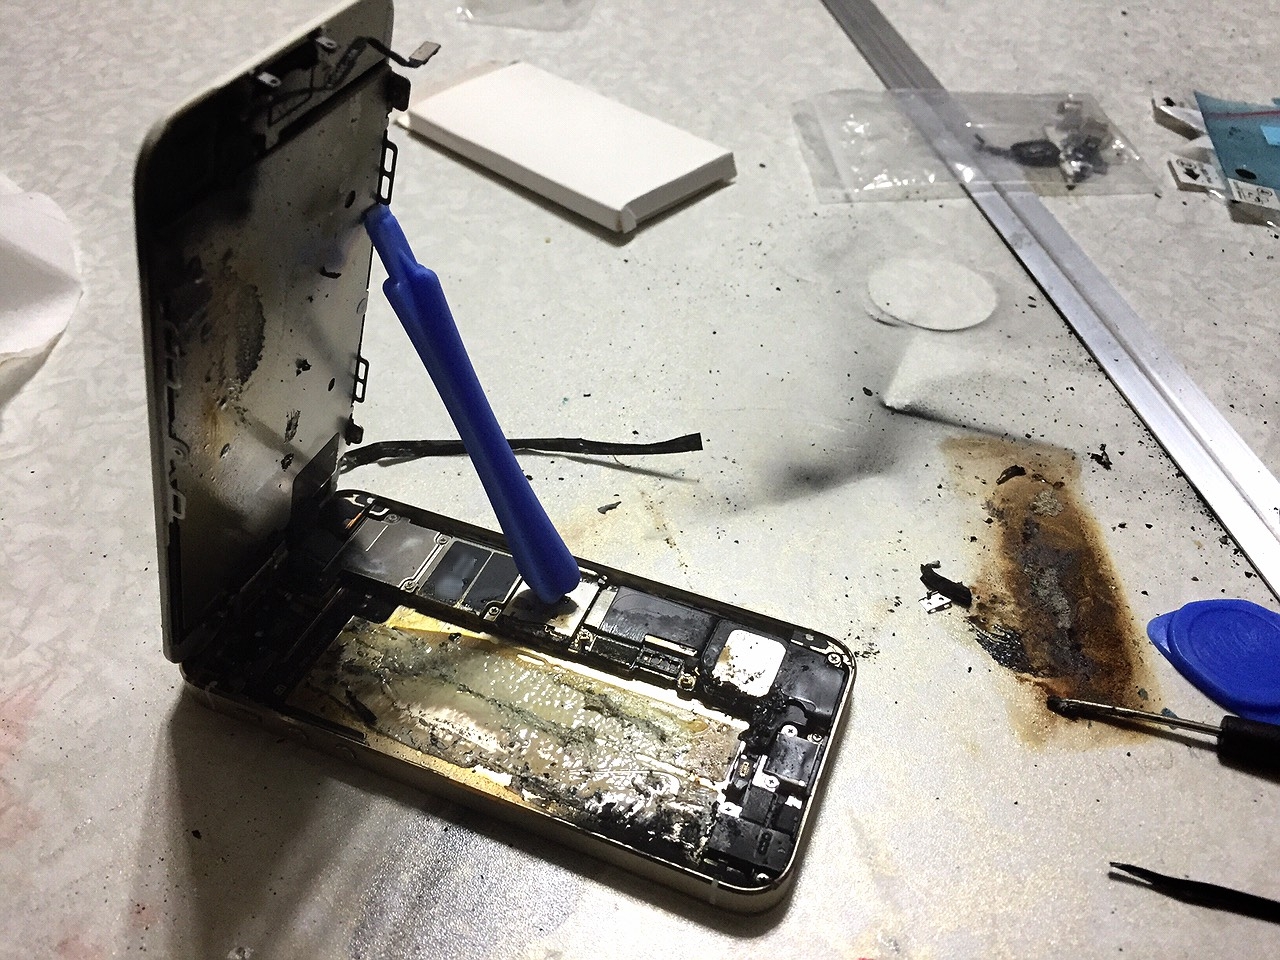 Iphoneバッテリー交換失敗による発火に注意 まず分解